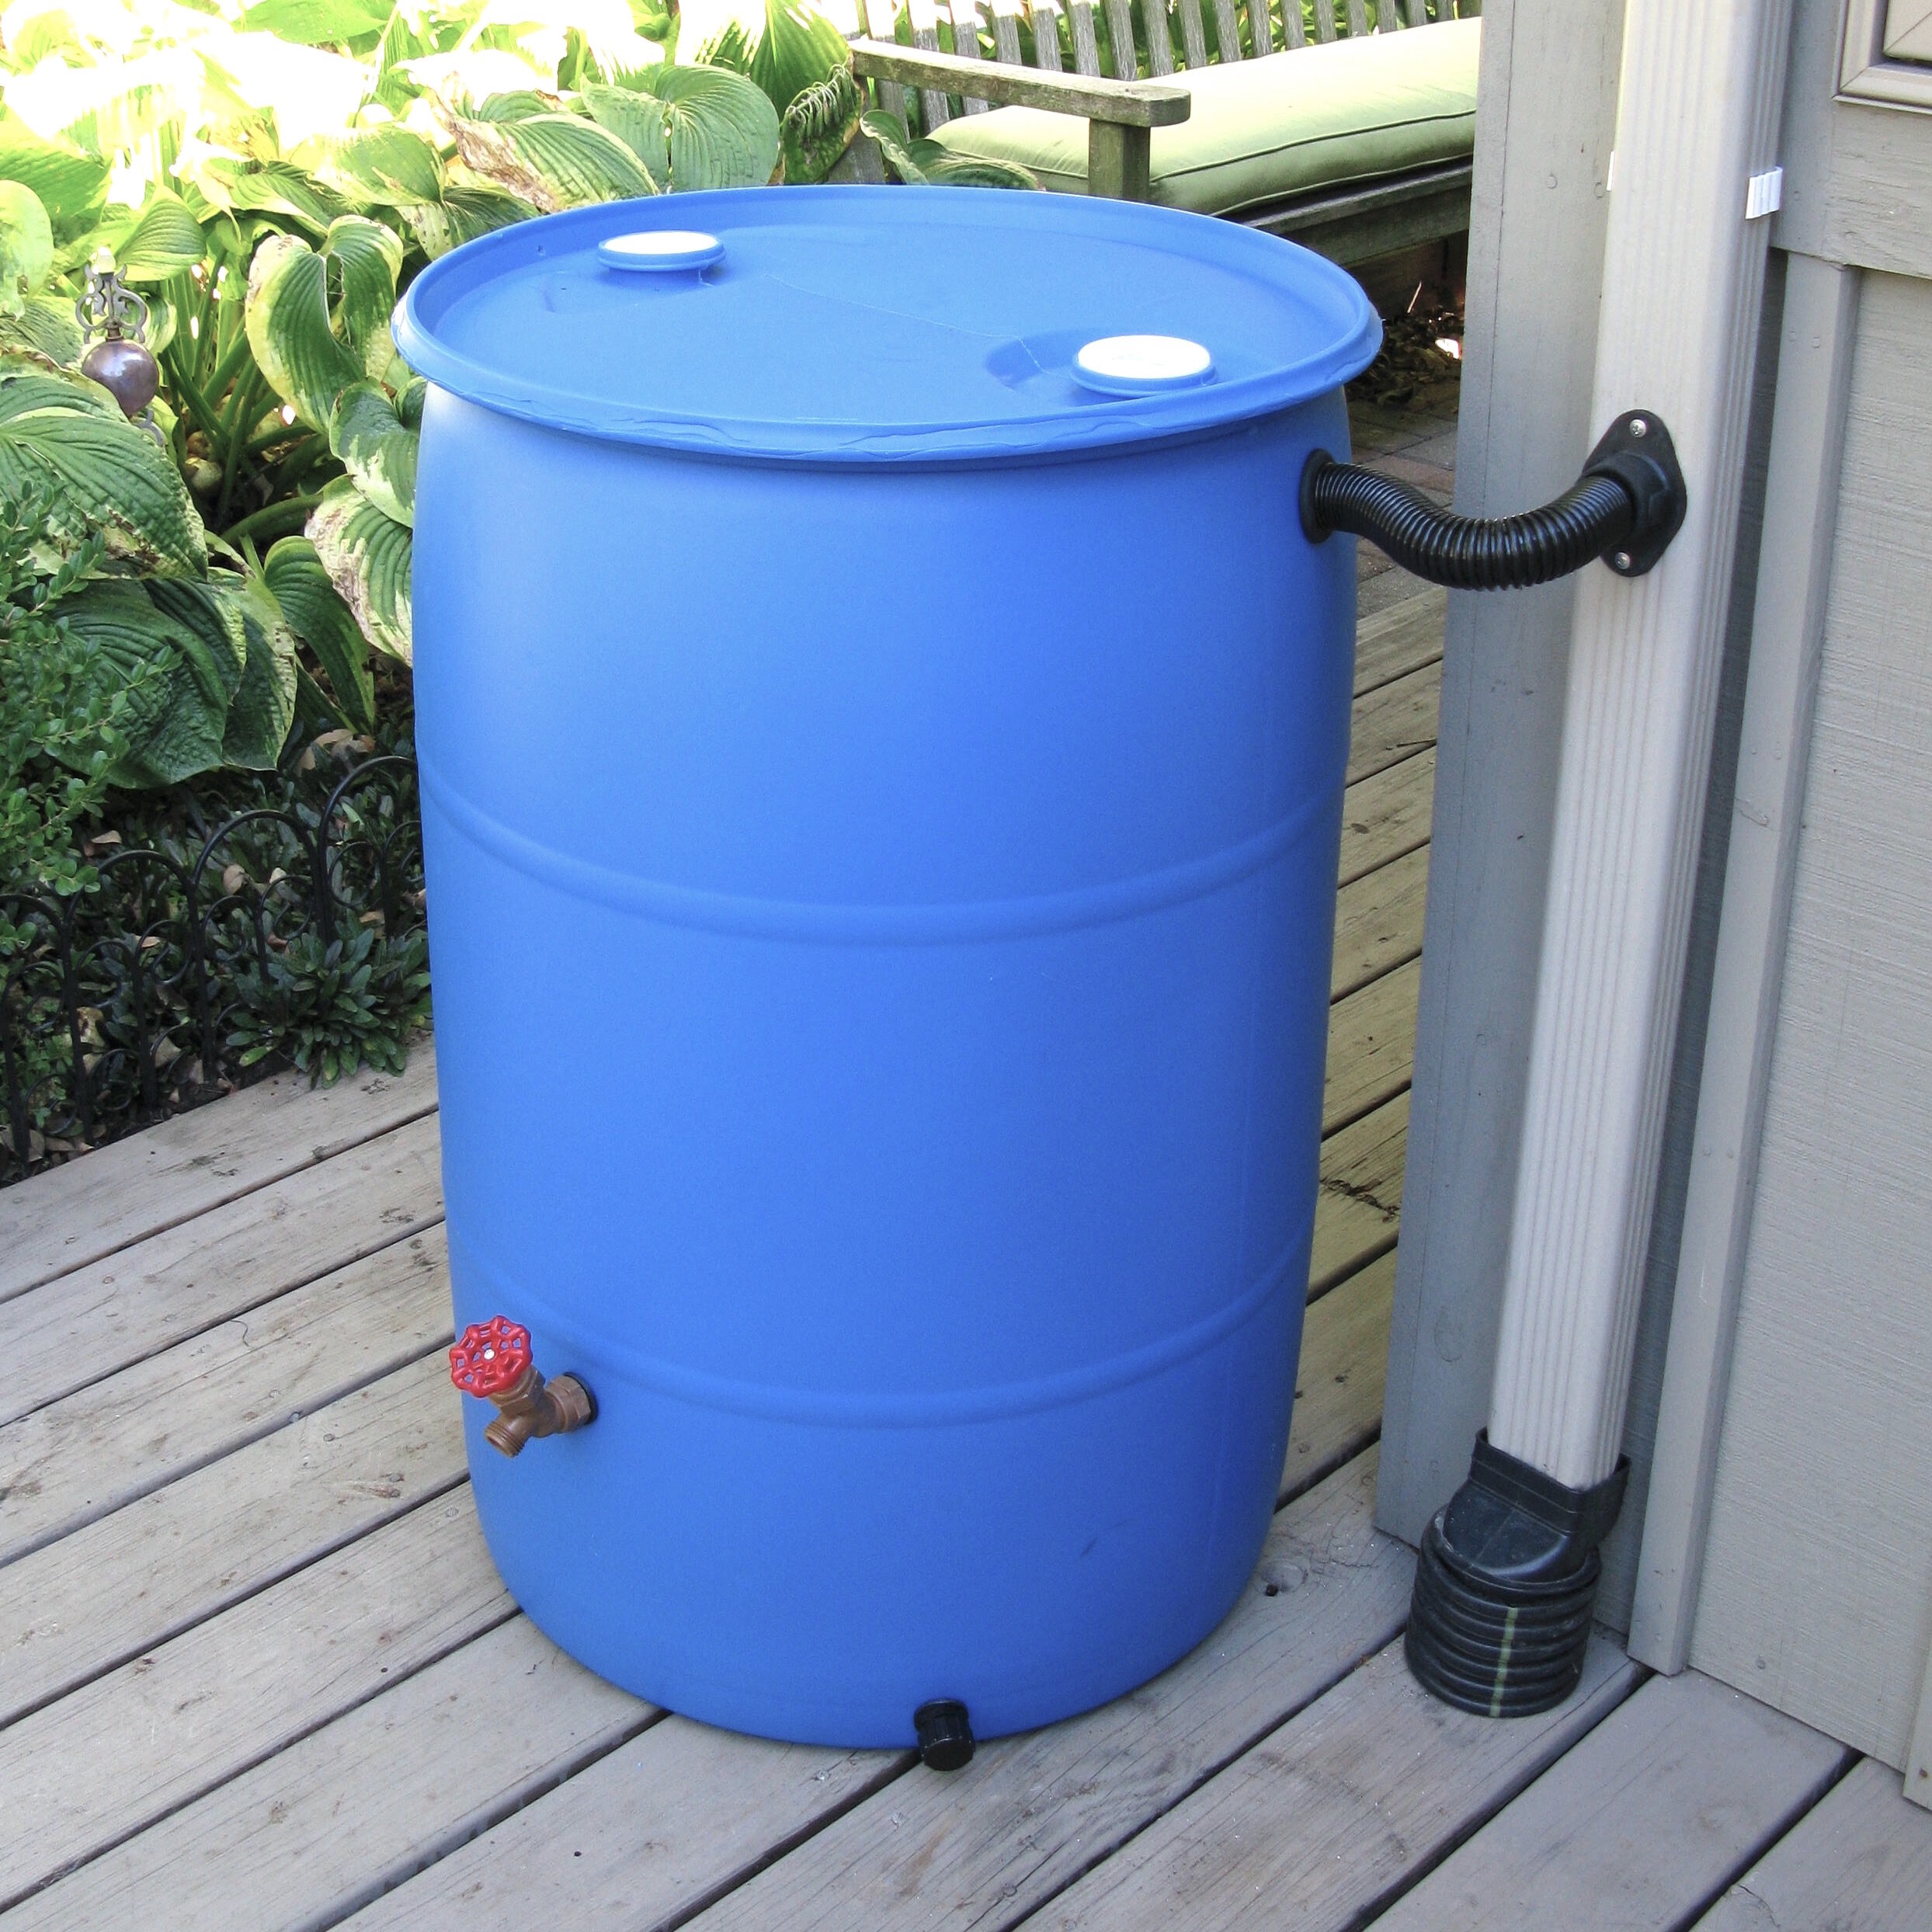 How to Make a DIY Rain Barrel  The Easiest Way to Save Rain Water